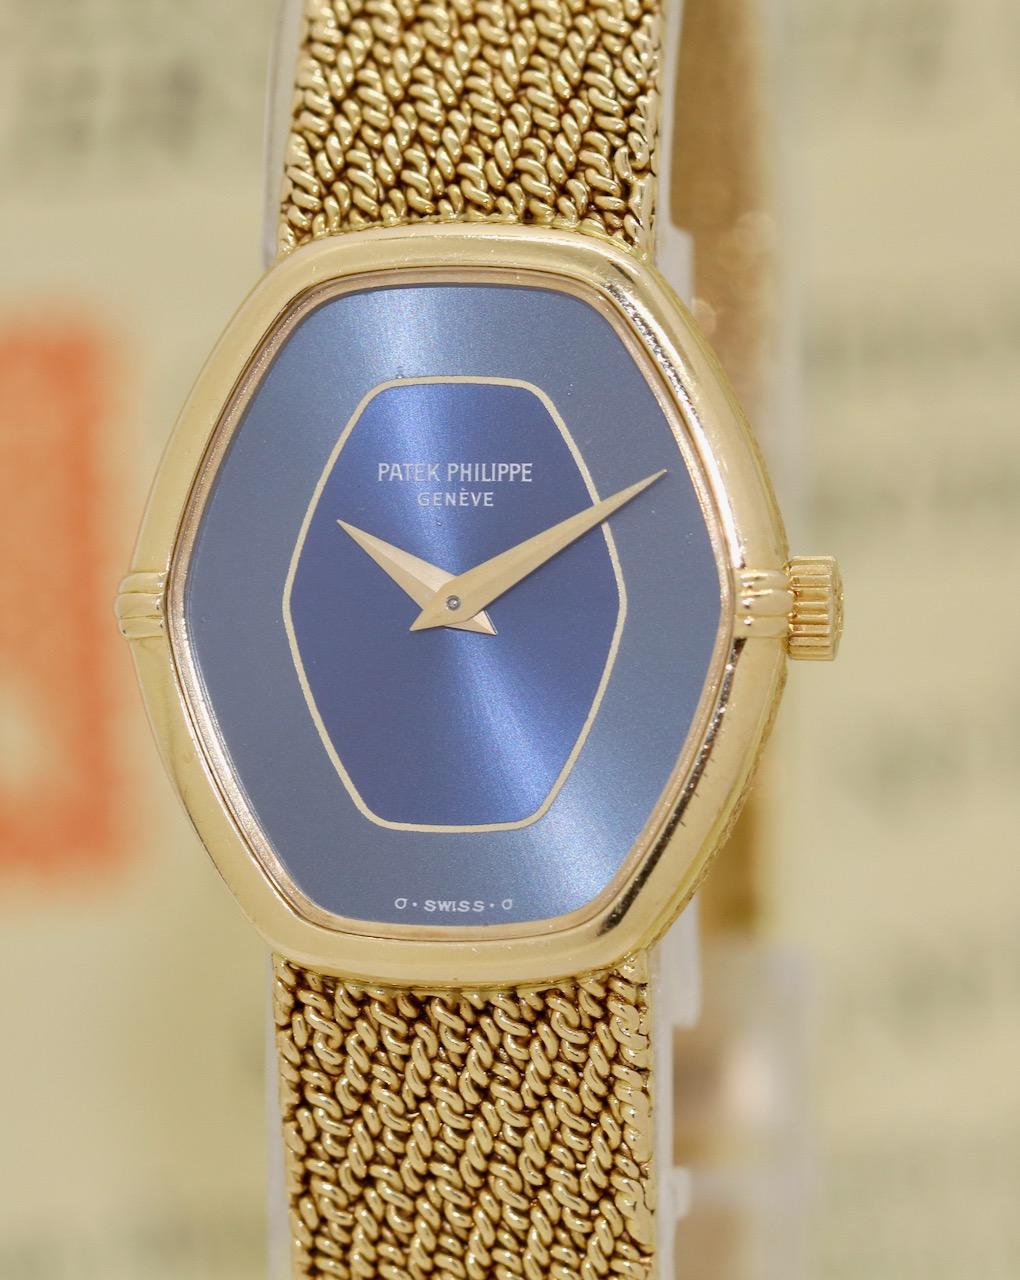 Rare Patek Philippe 18 Karat Gold Vintage Ladies Wrist Watch Ref. 4463 with Blue Dial
Mechanical Movement.

Including original PP 